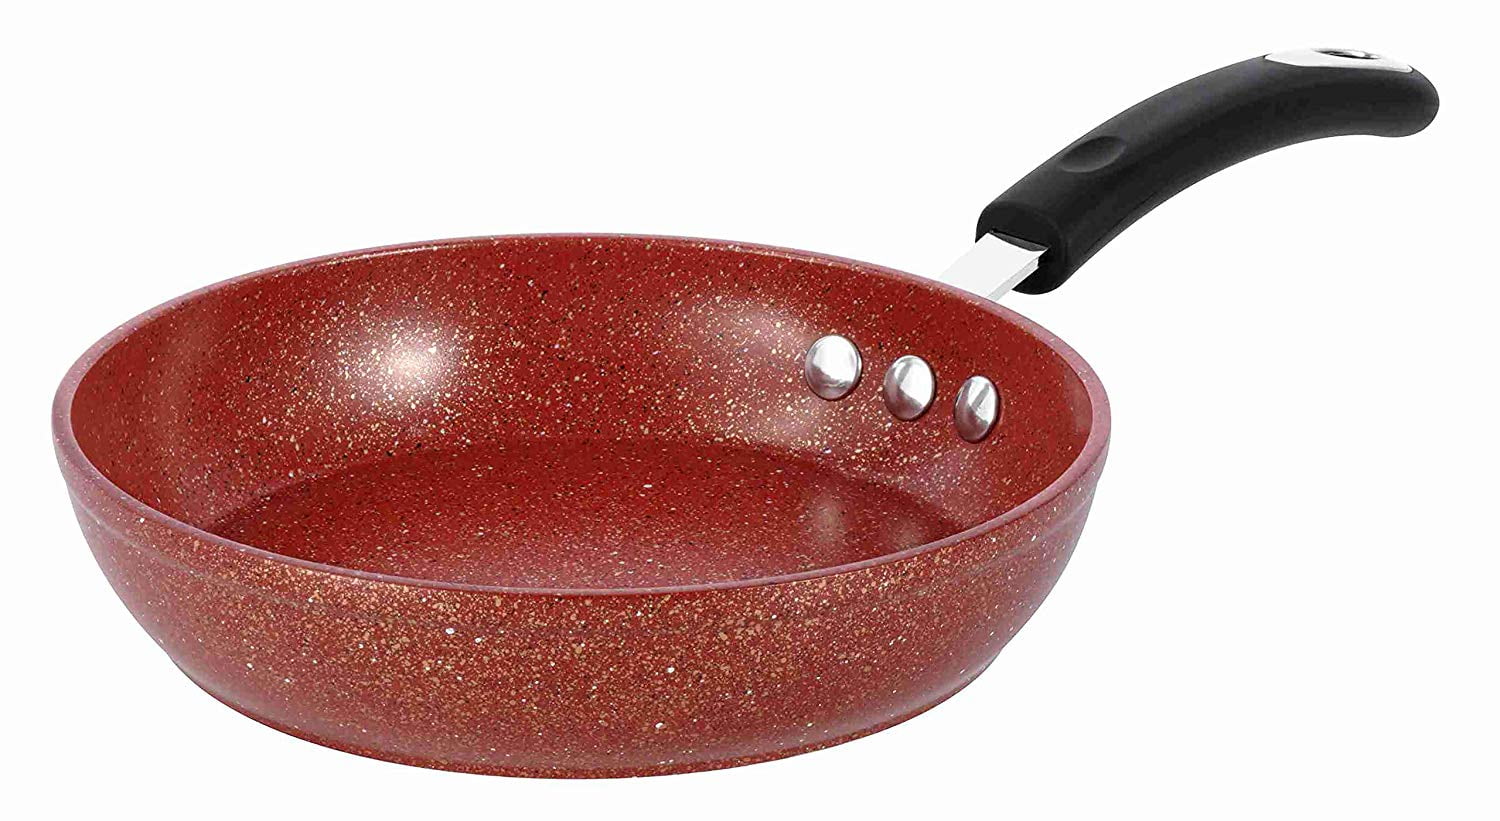  8 Stone Frying Pan by Ozeri, with 100% APEO & PFOA